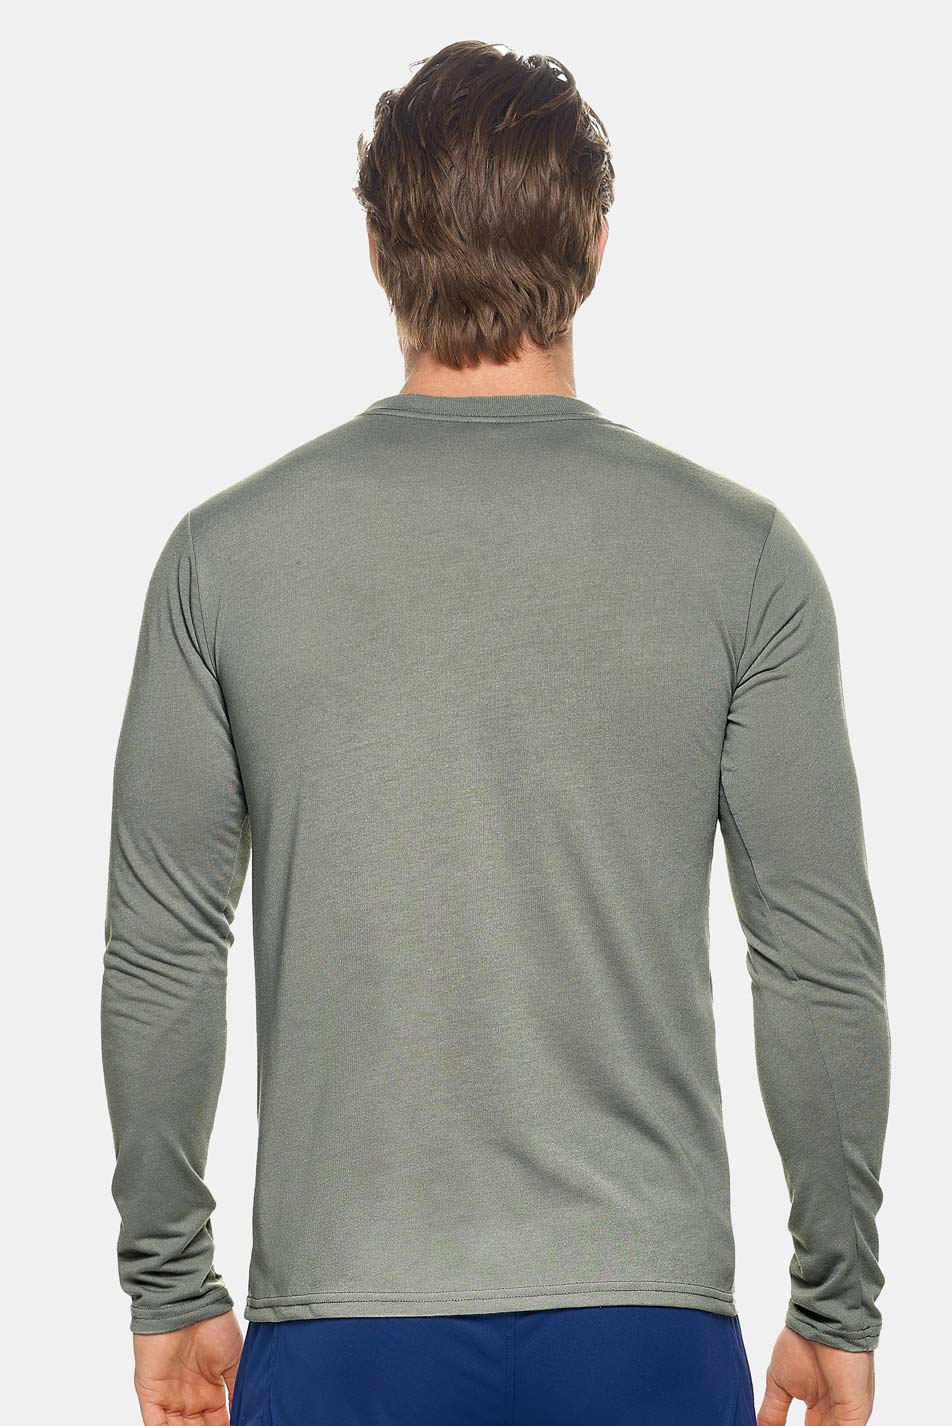 PT908 Men's Physical Training Long Sleeve T-Shirt